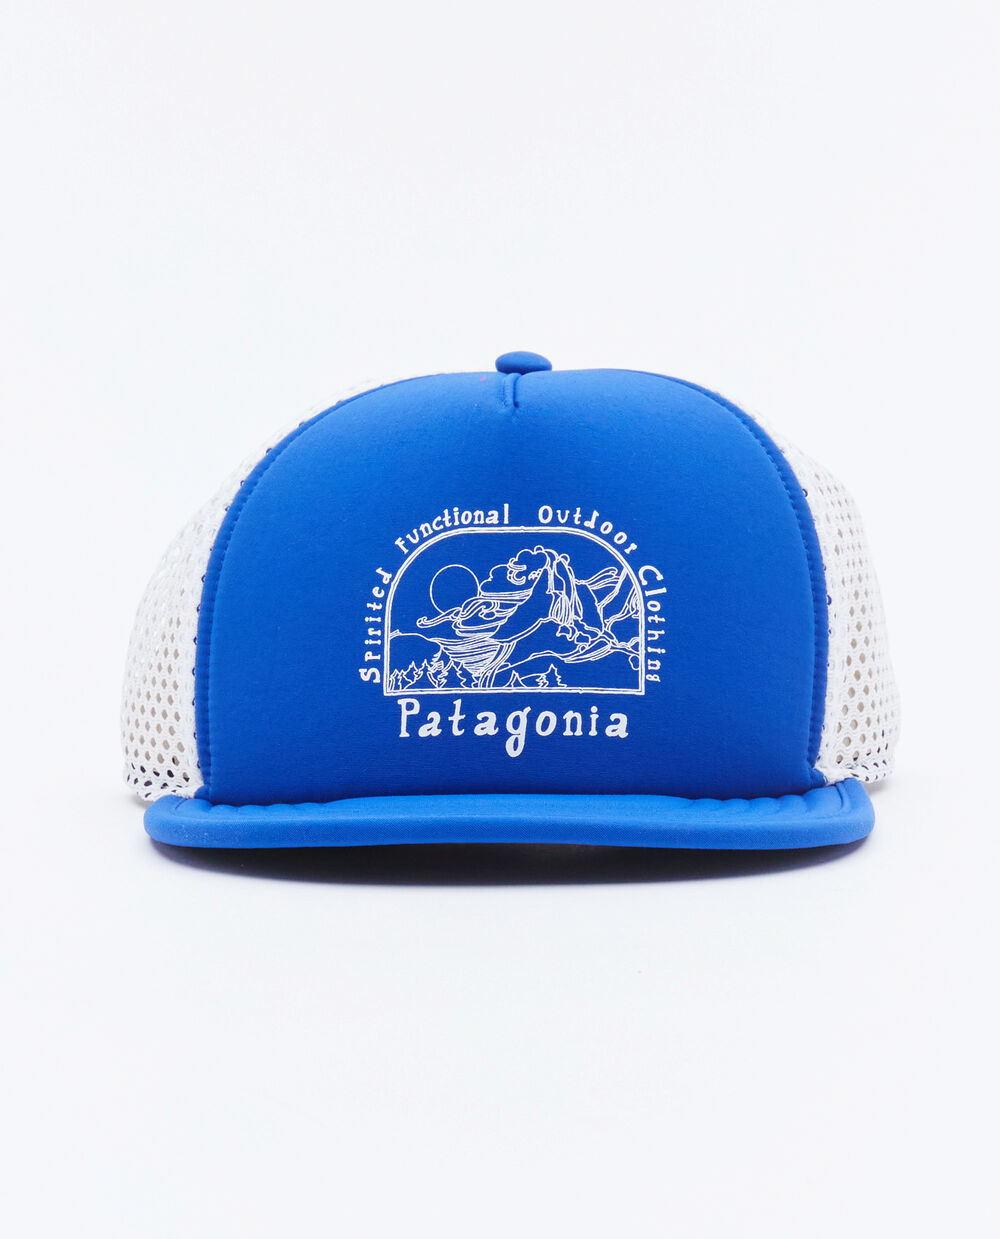 Patagonia Duckbill Trucker Hat - Accessories